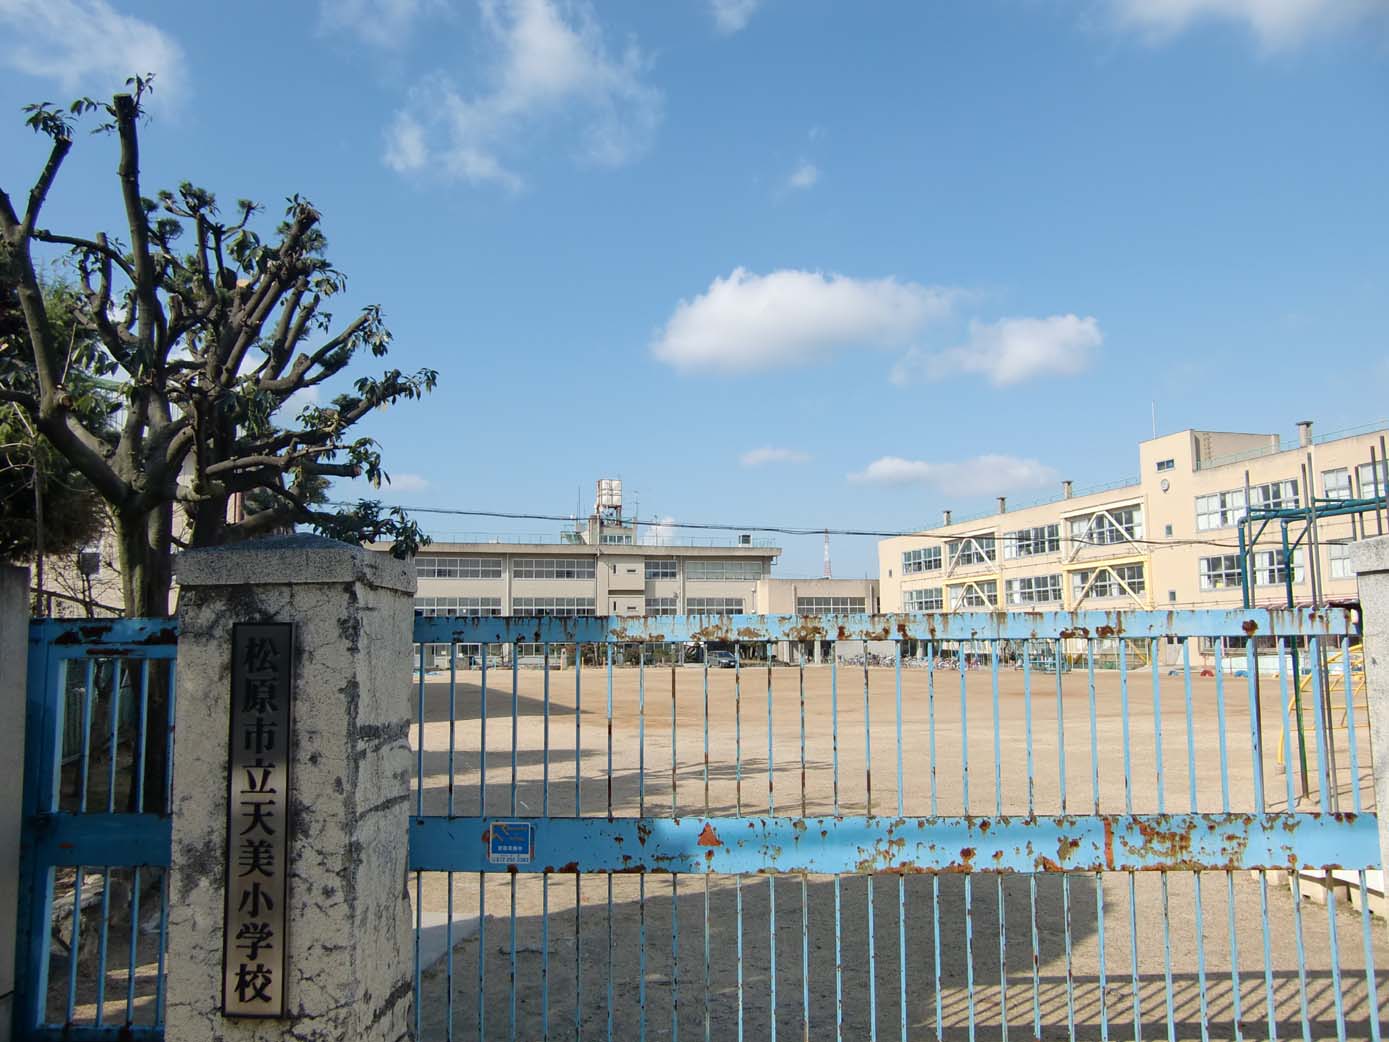 Primary school. Matsubara Municipal Amami up to elementary school (elementary school) 907m